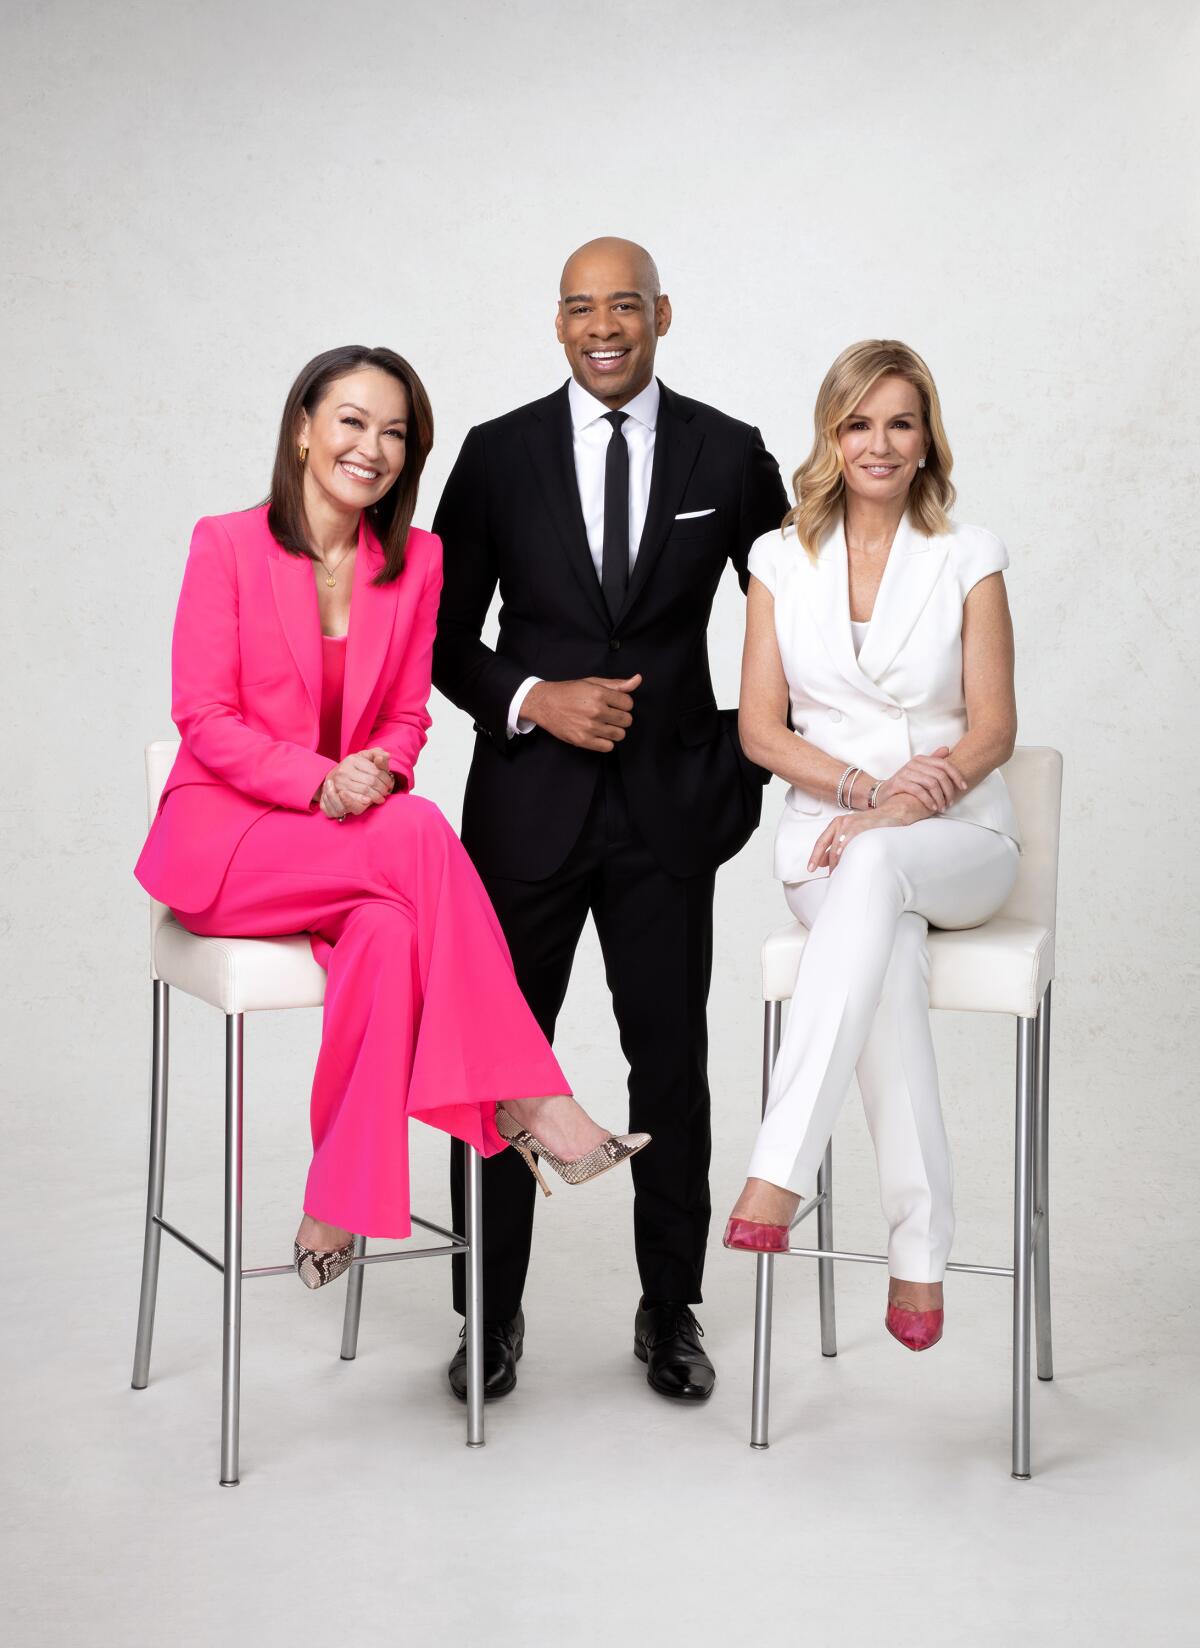 Eva Pilgrim, DeMarco Morgan and Dr. Jennifer Ashton pose in an ABC News photo